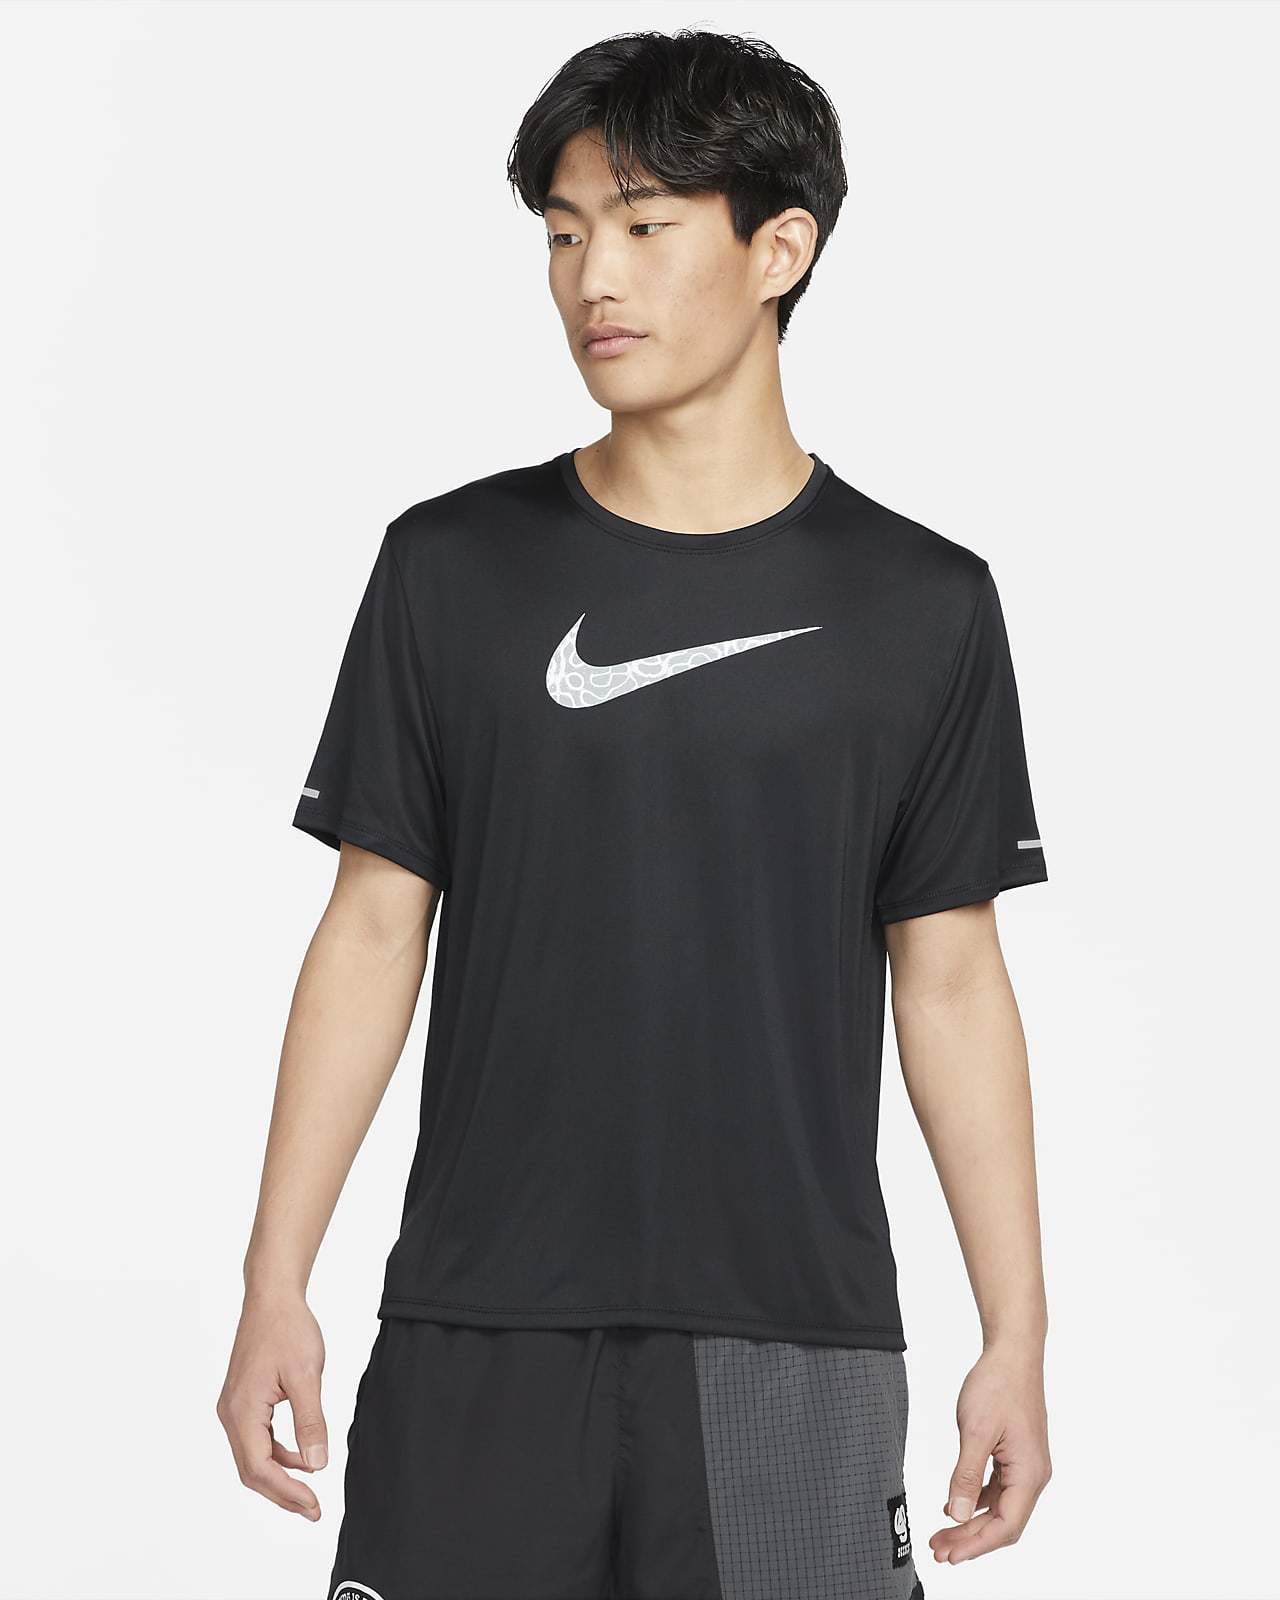 Chapoteo Mantenimiento Rebotar Nike Dri-FIT Wild Run Miler Men's Short-Sleeve Running Top. Nike ID